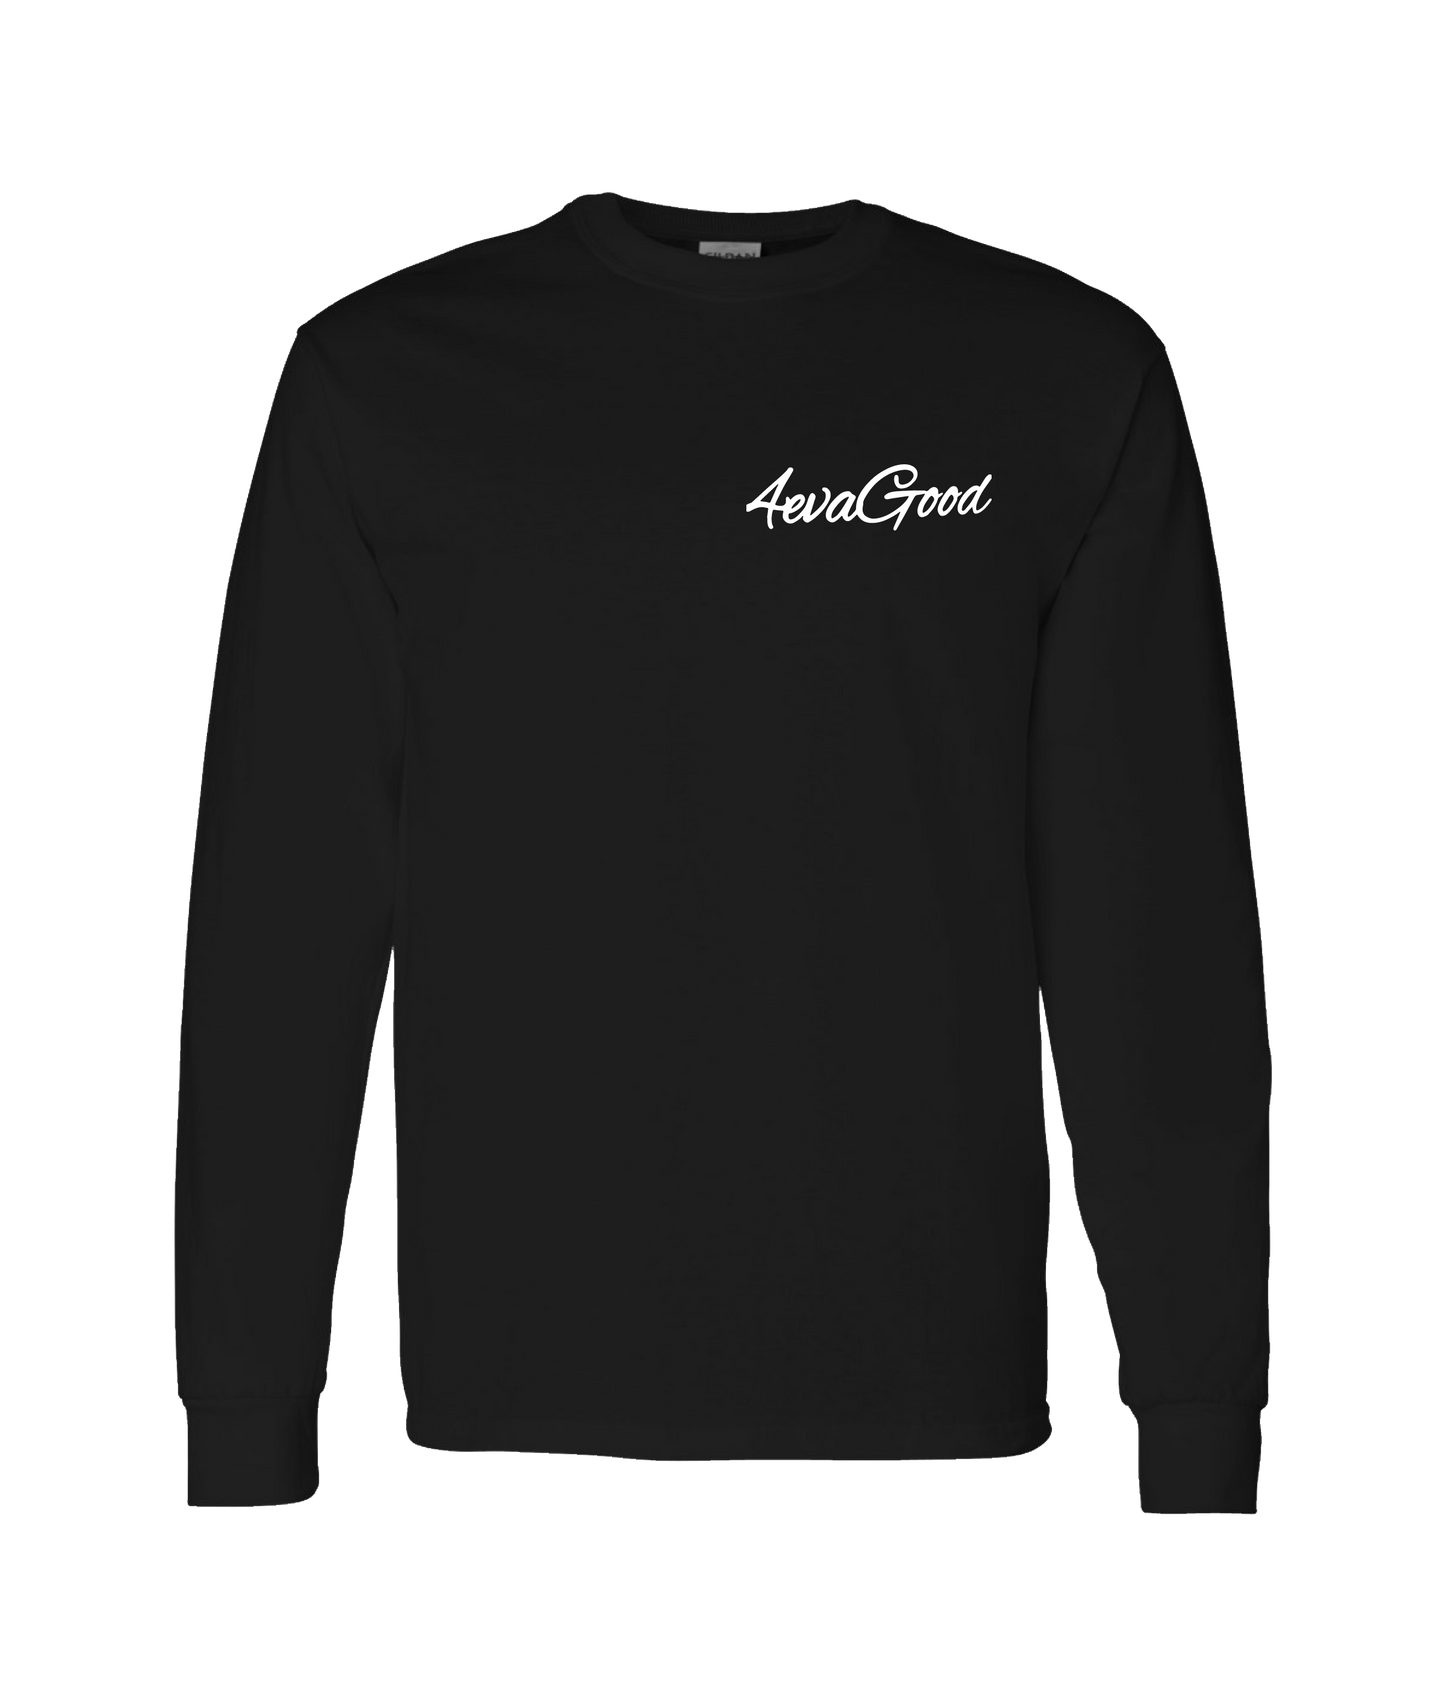 4evaGood - Logo - Black Long Sleeve T